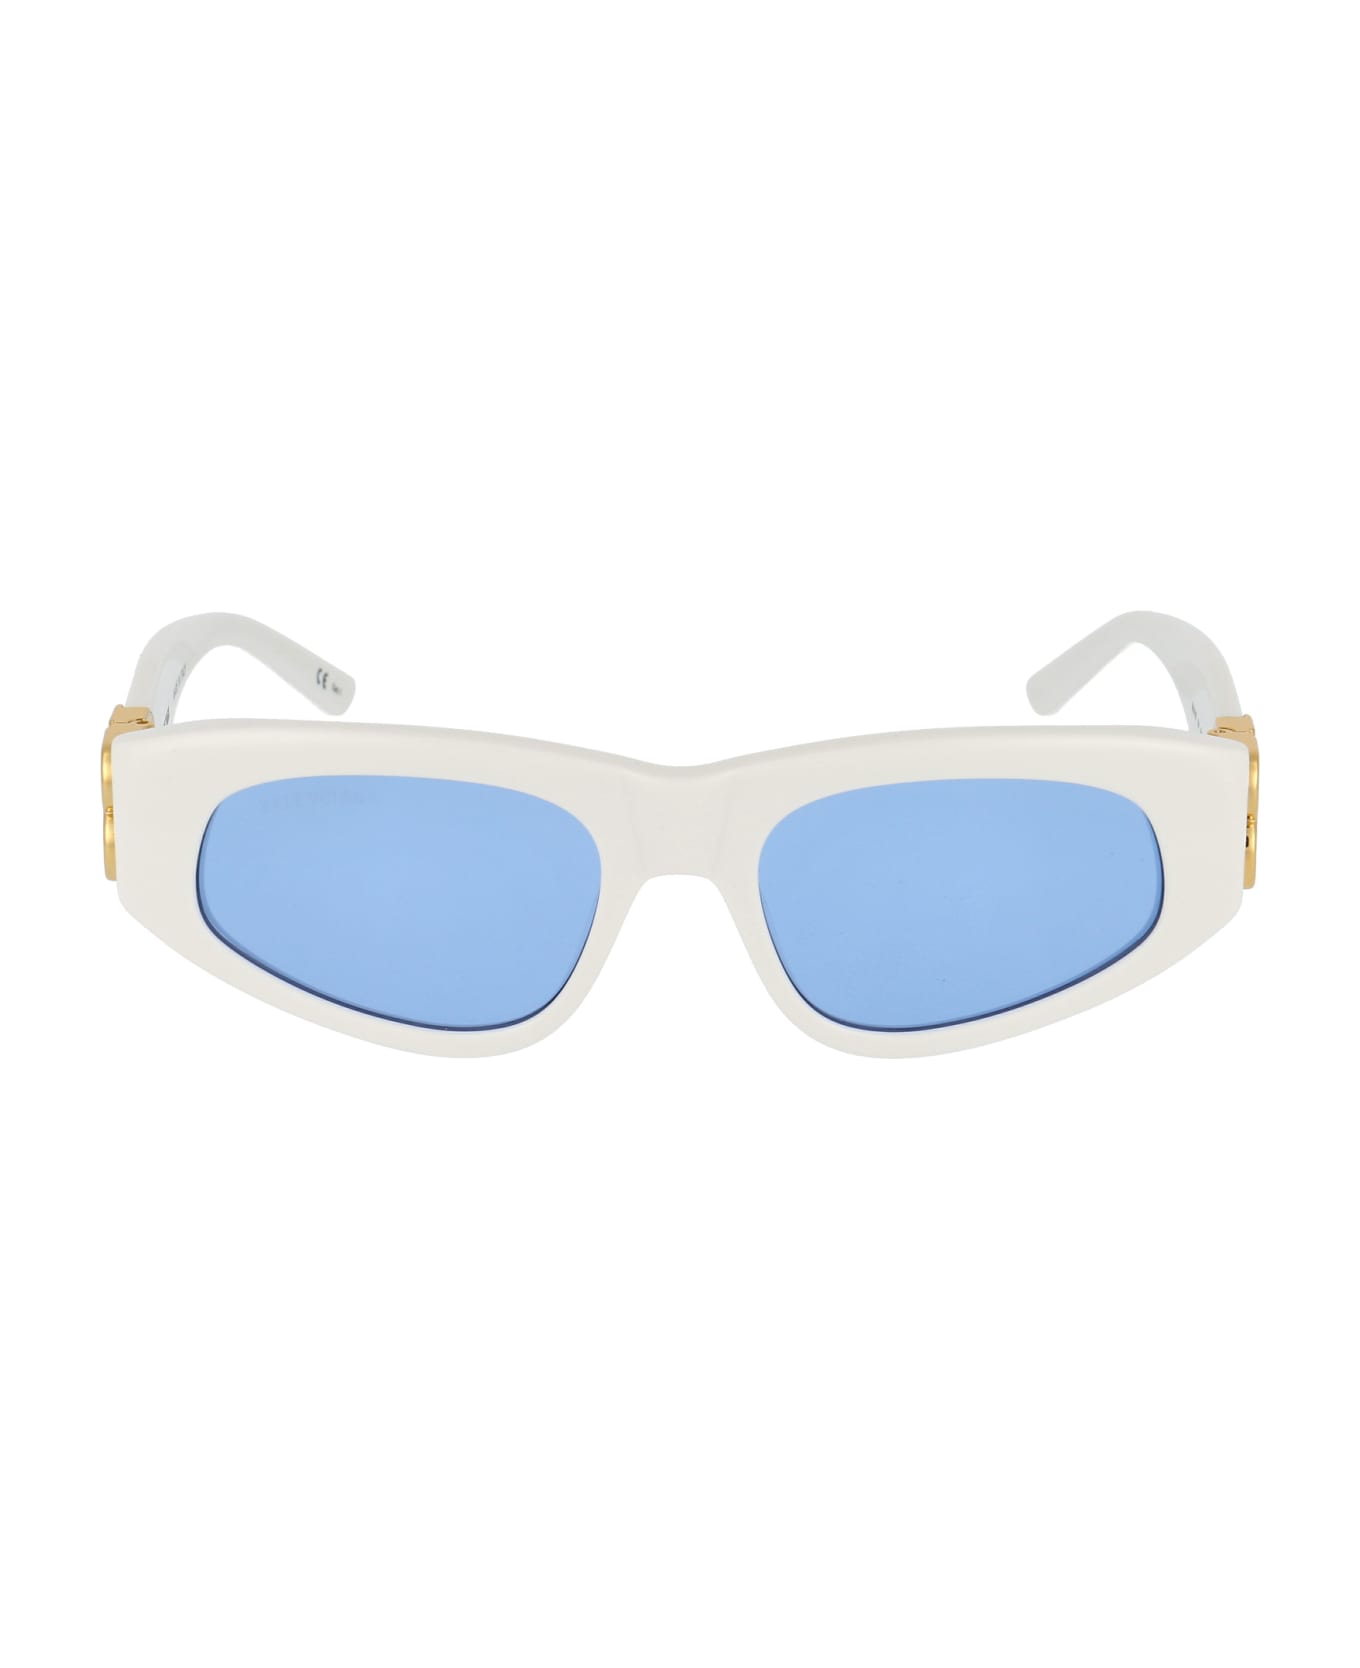 Balenciaga Eyewear Bb0095s Sunglasses - 004 WHITE GOLD LIGHT BLUE サングラス